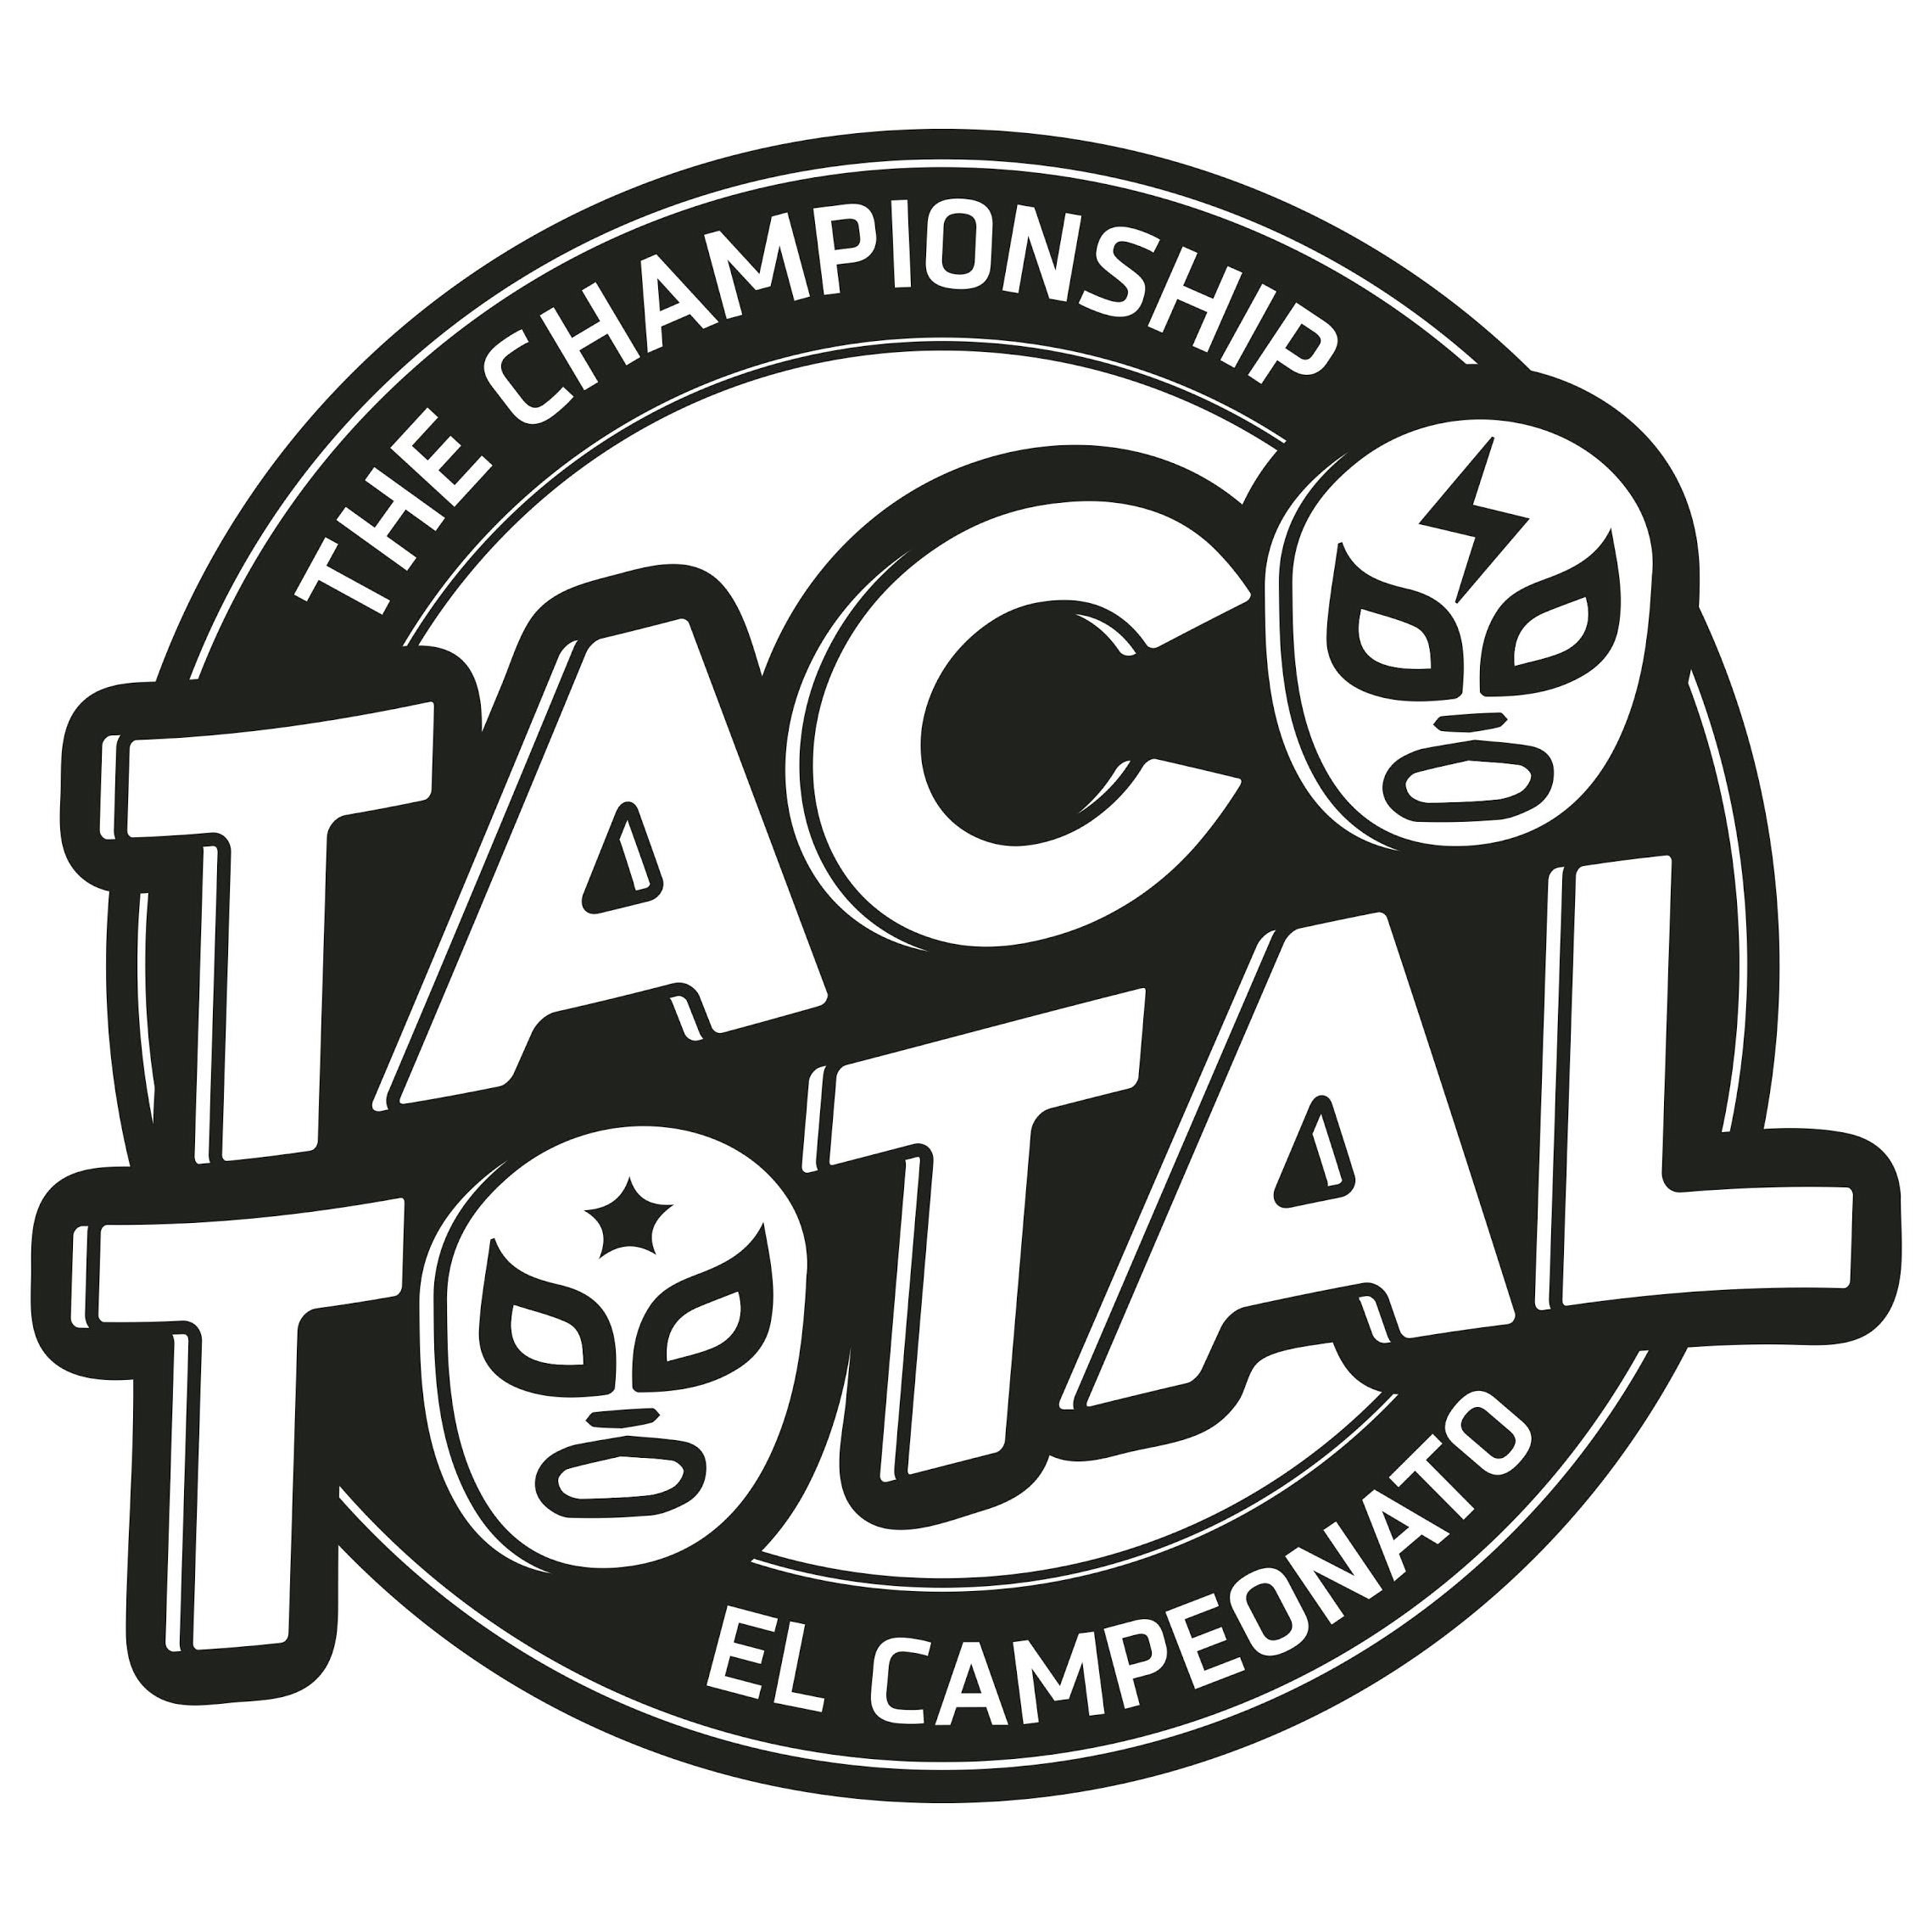  THE CHAMPIONSHIP TACO TOTAL EL CAMPEONATO